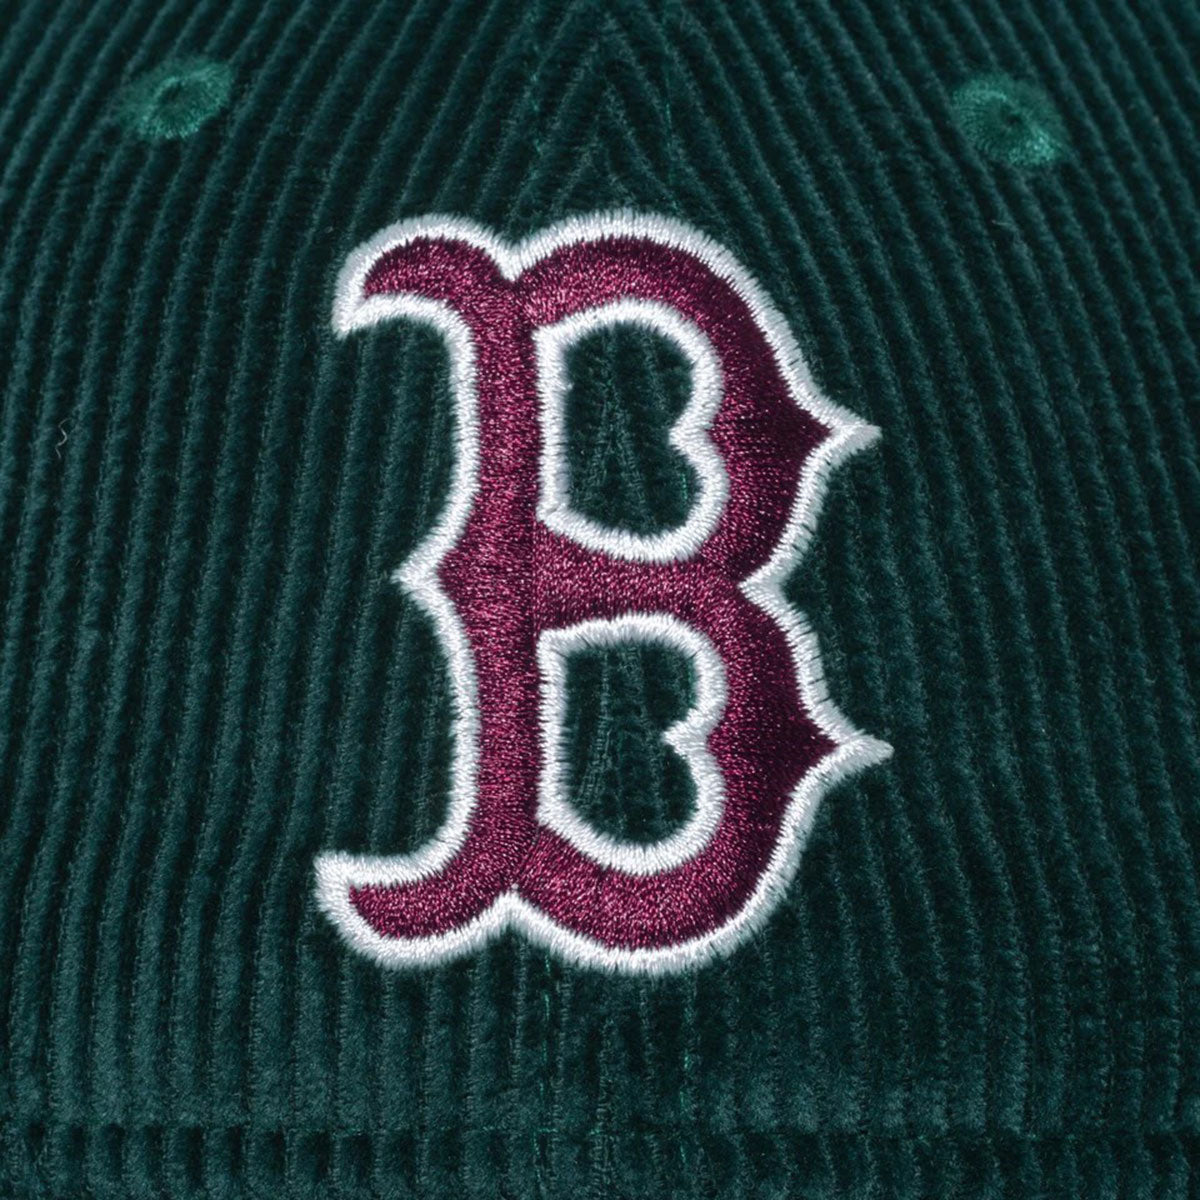 NEW ERA Boston Red Sox - 8W CORDUROY 9TWENTY DGRN【13751046】